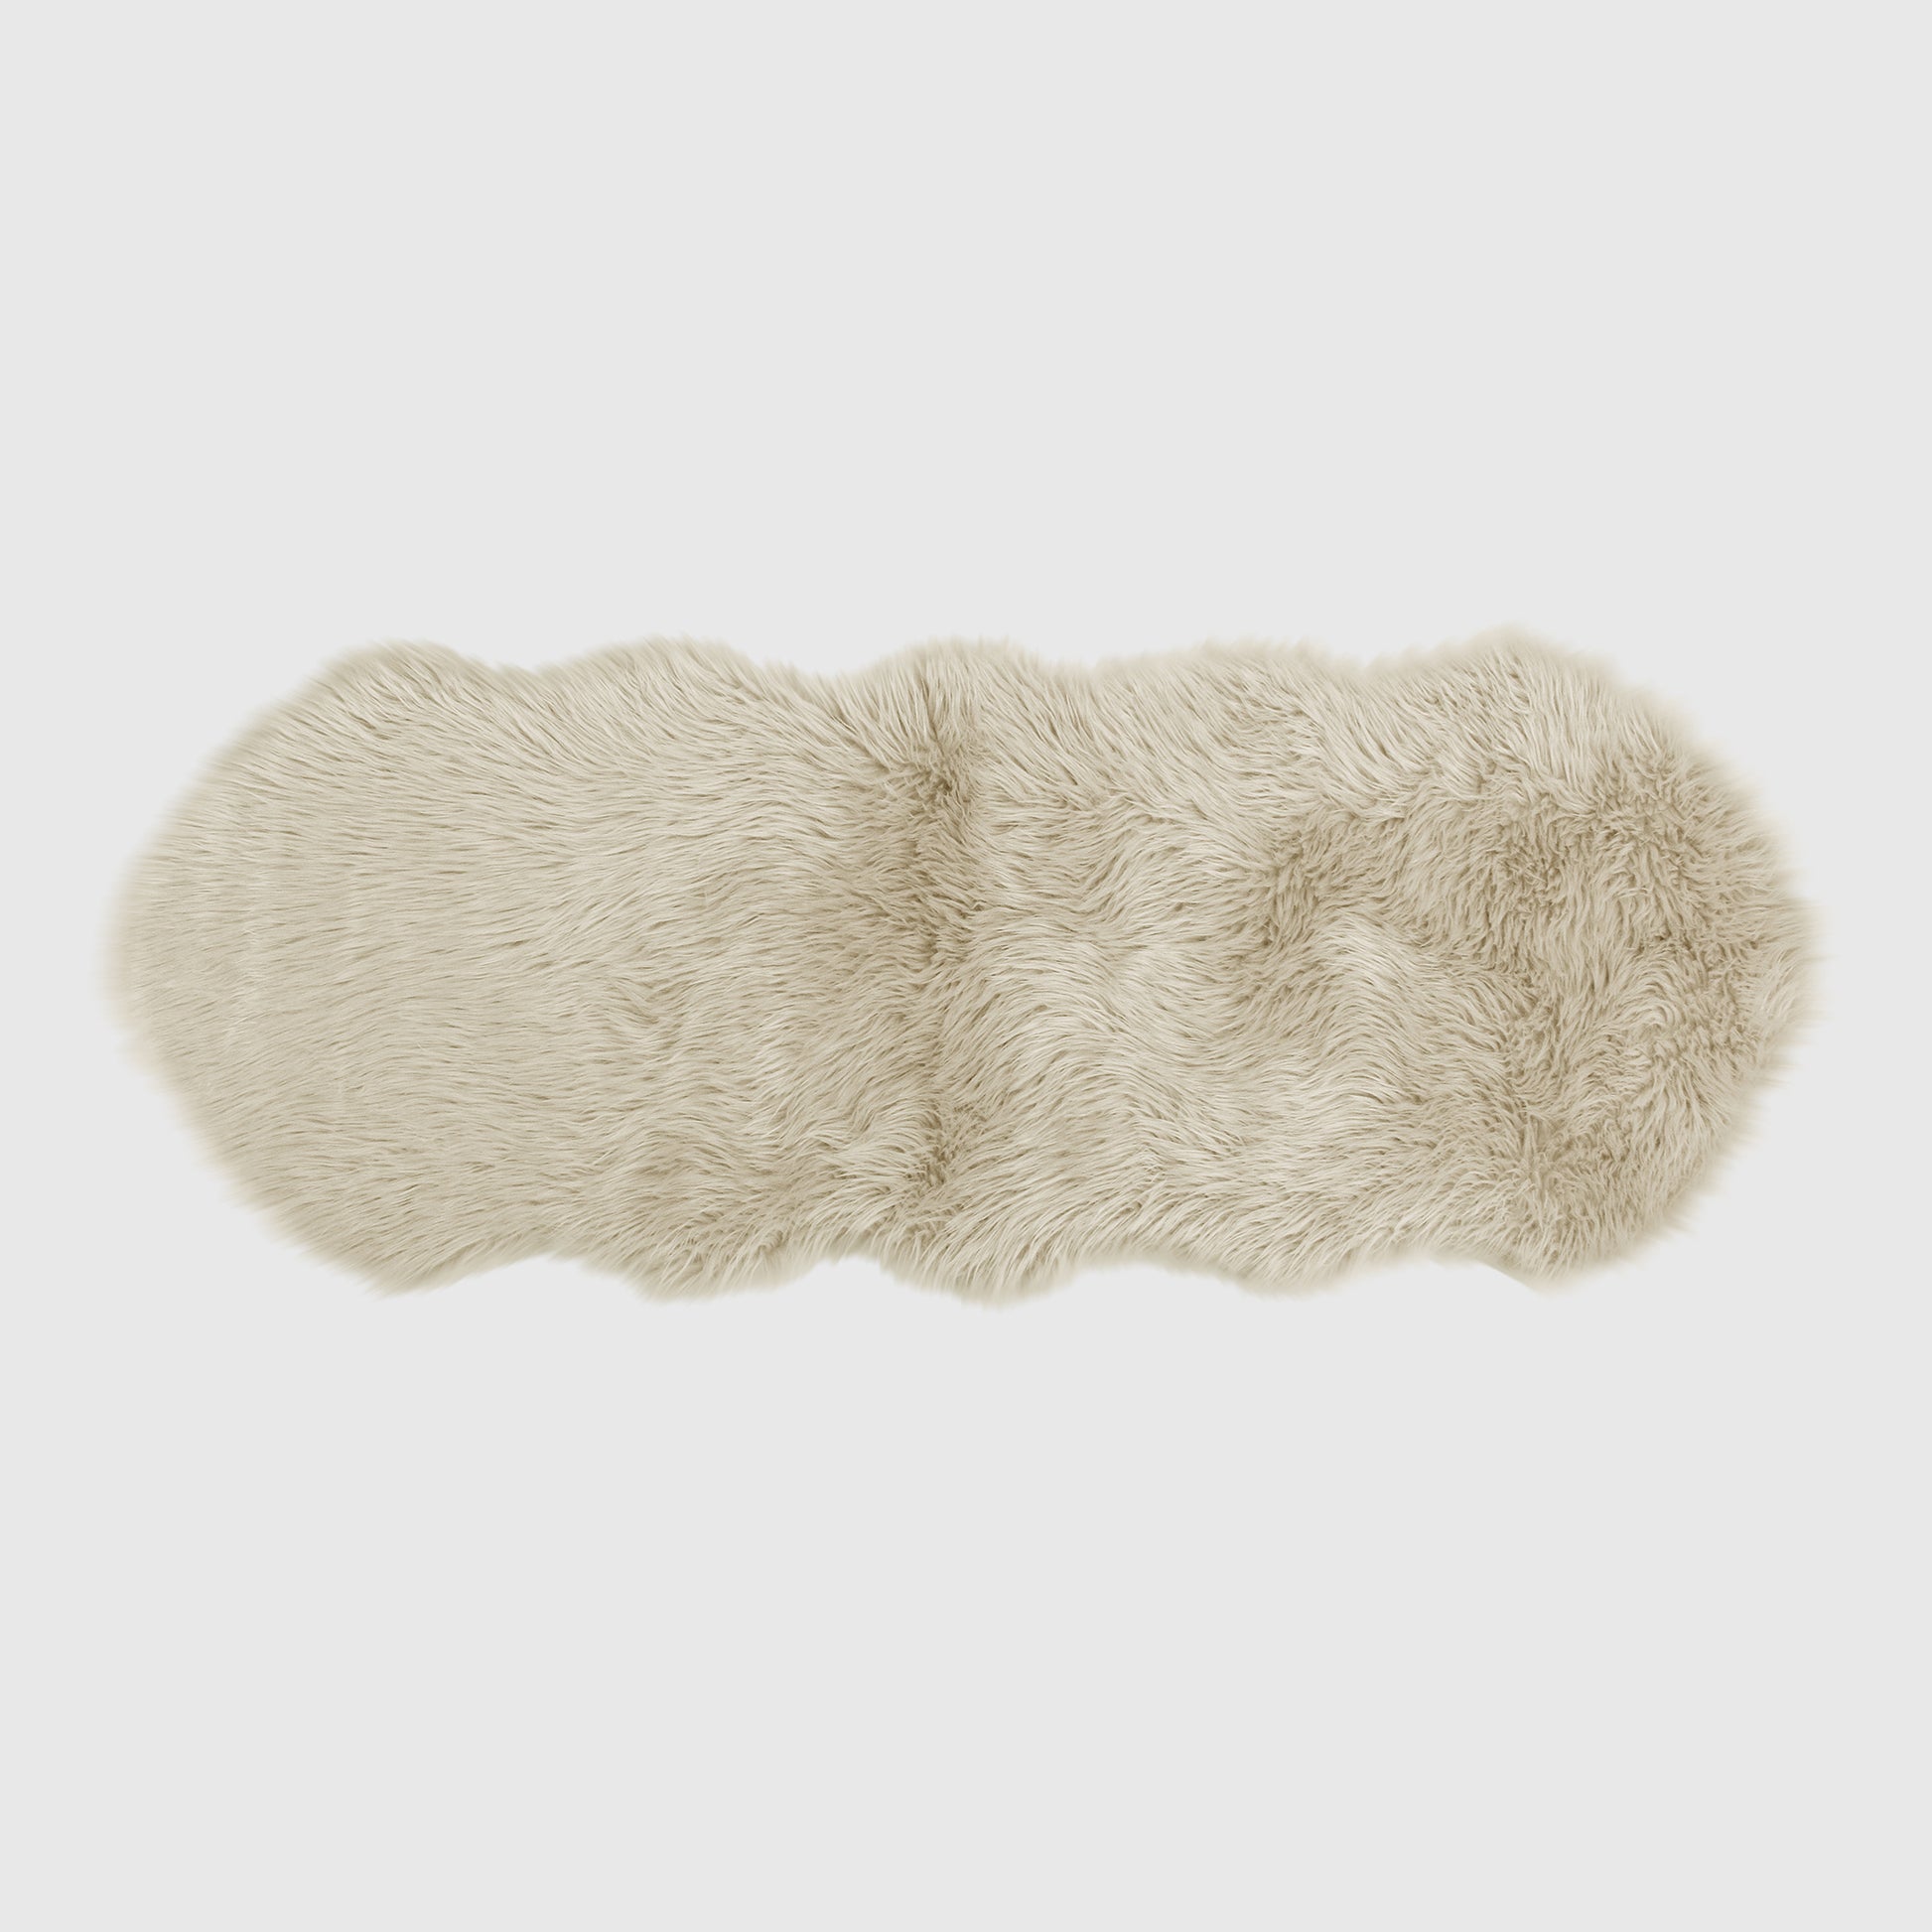 The Mood | Harris Faux Fur 2'x5' Rug, Oatmeal (Birch)